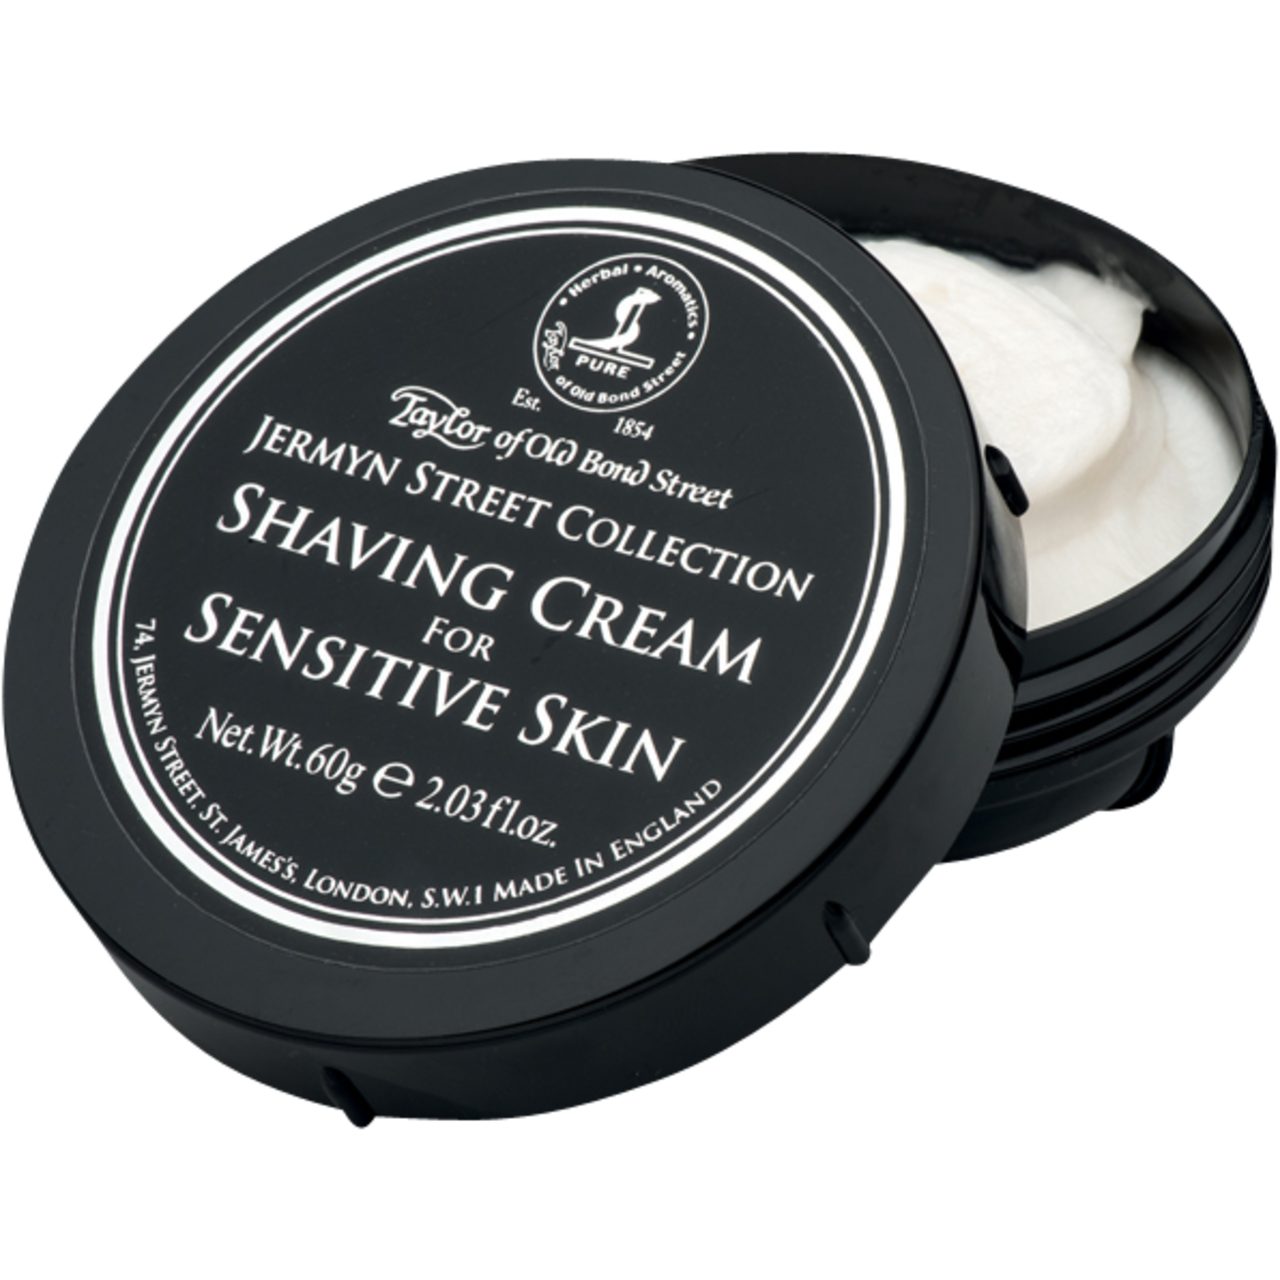 Collection Cream Shaving Jermyn Street of Bond for sensitive Taylor Street Old Skin Rasiercreme